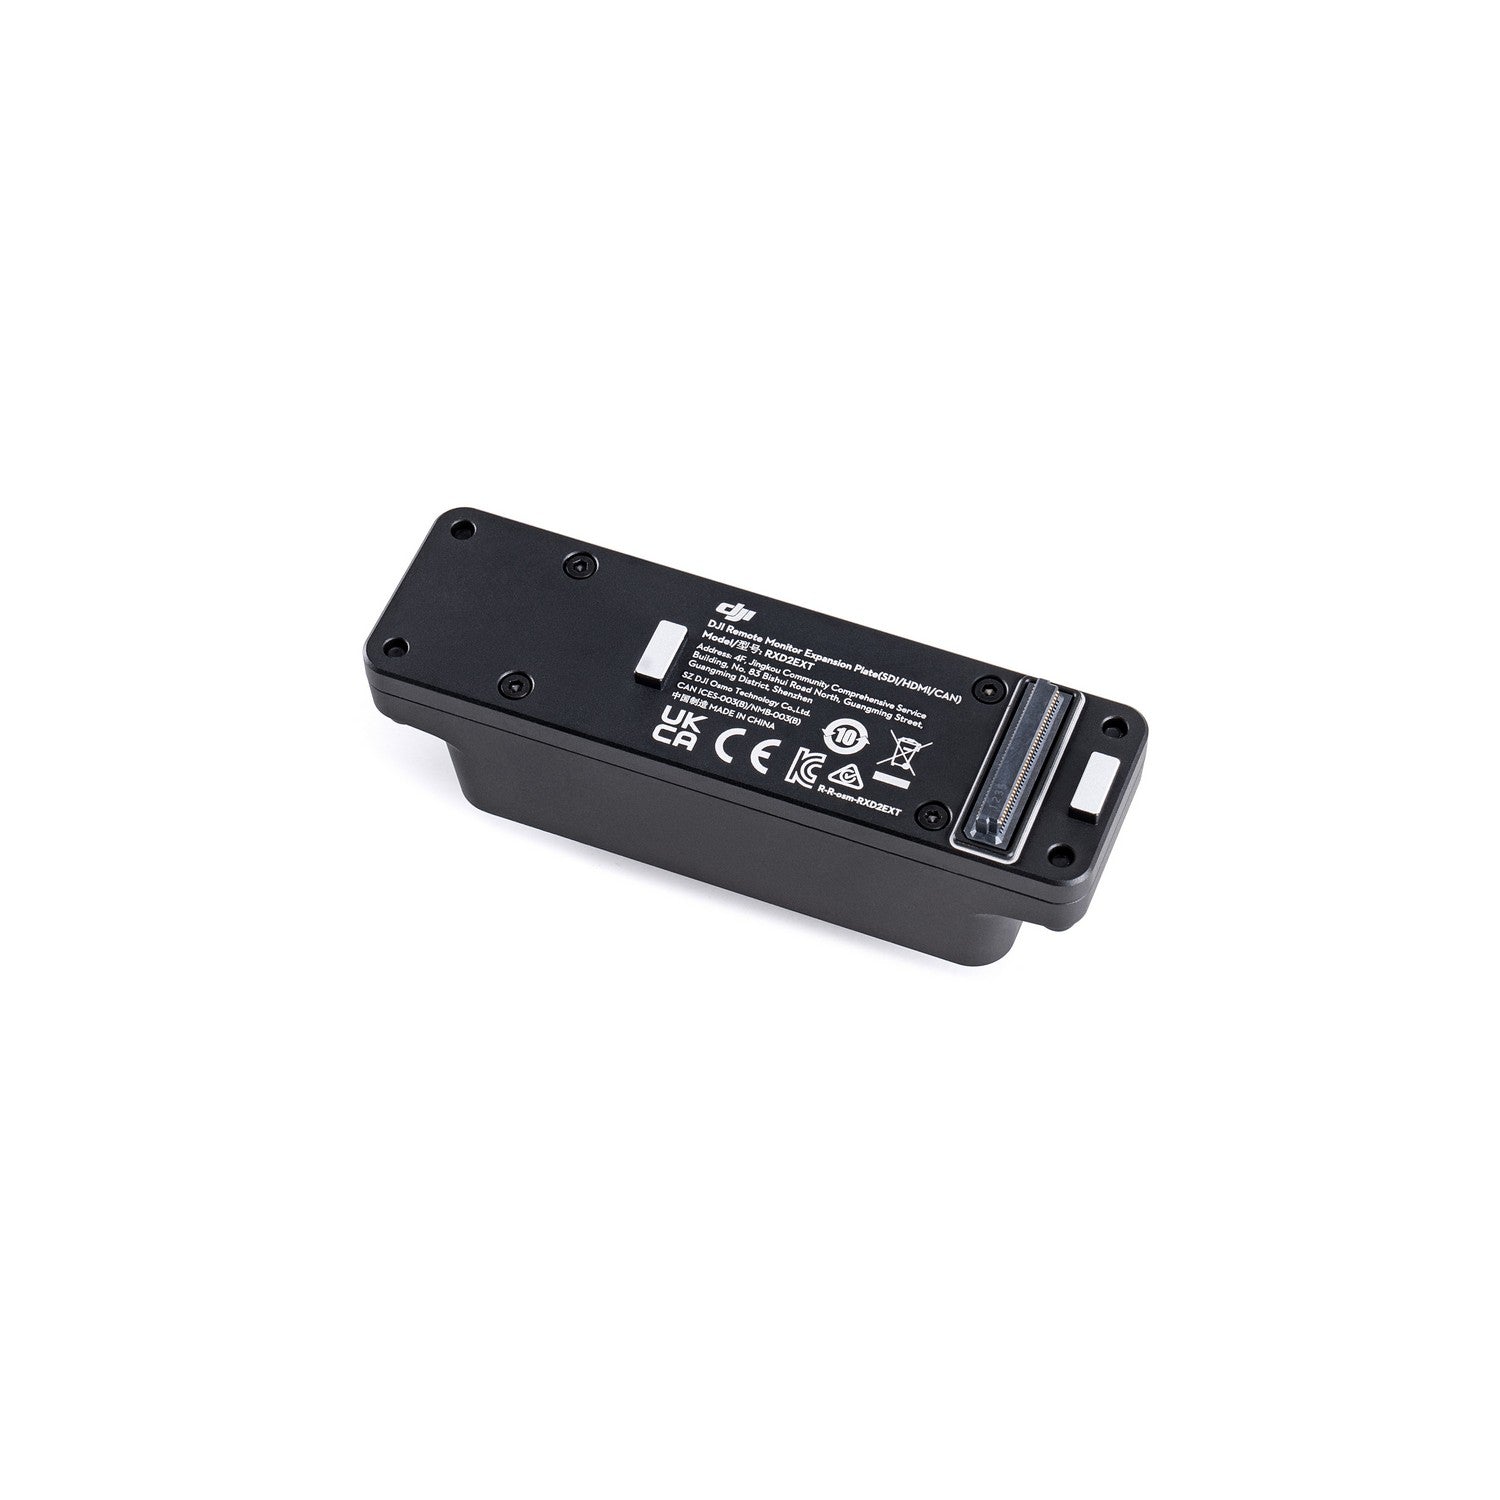 DJI Remote Monitor Expansion Plate (SDI/HDMI/DC-IN) (Ronin)-2